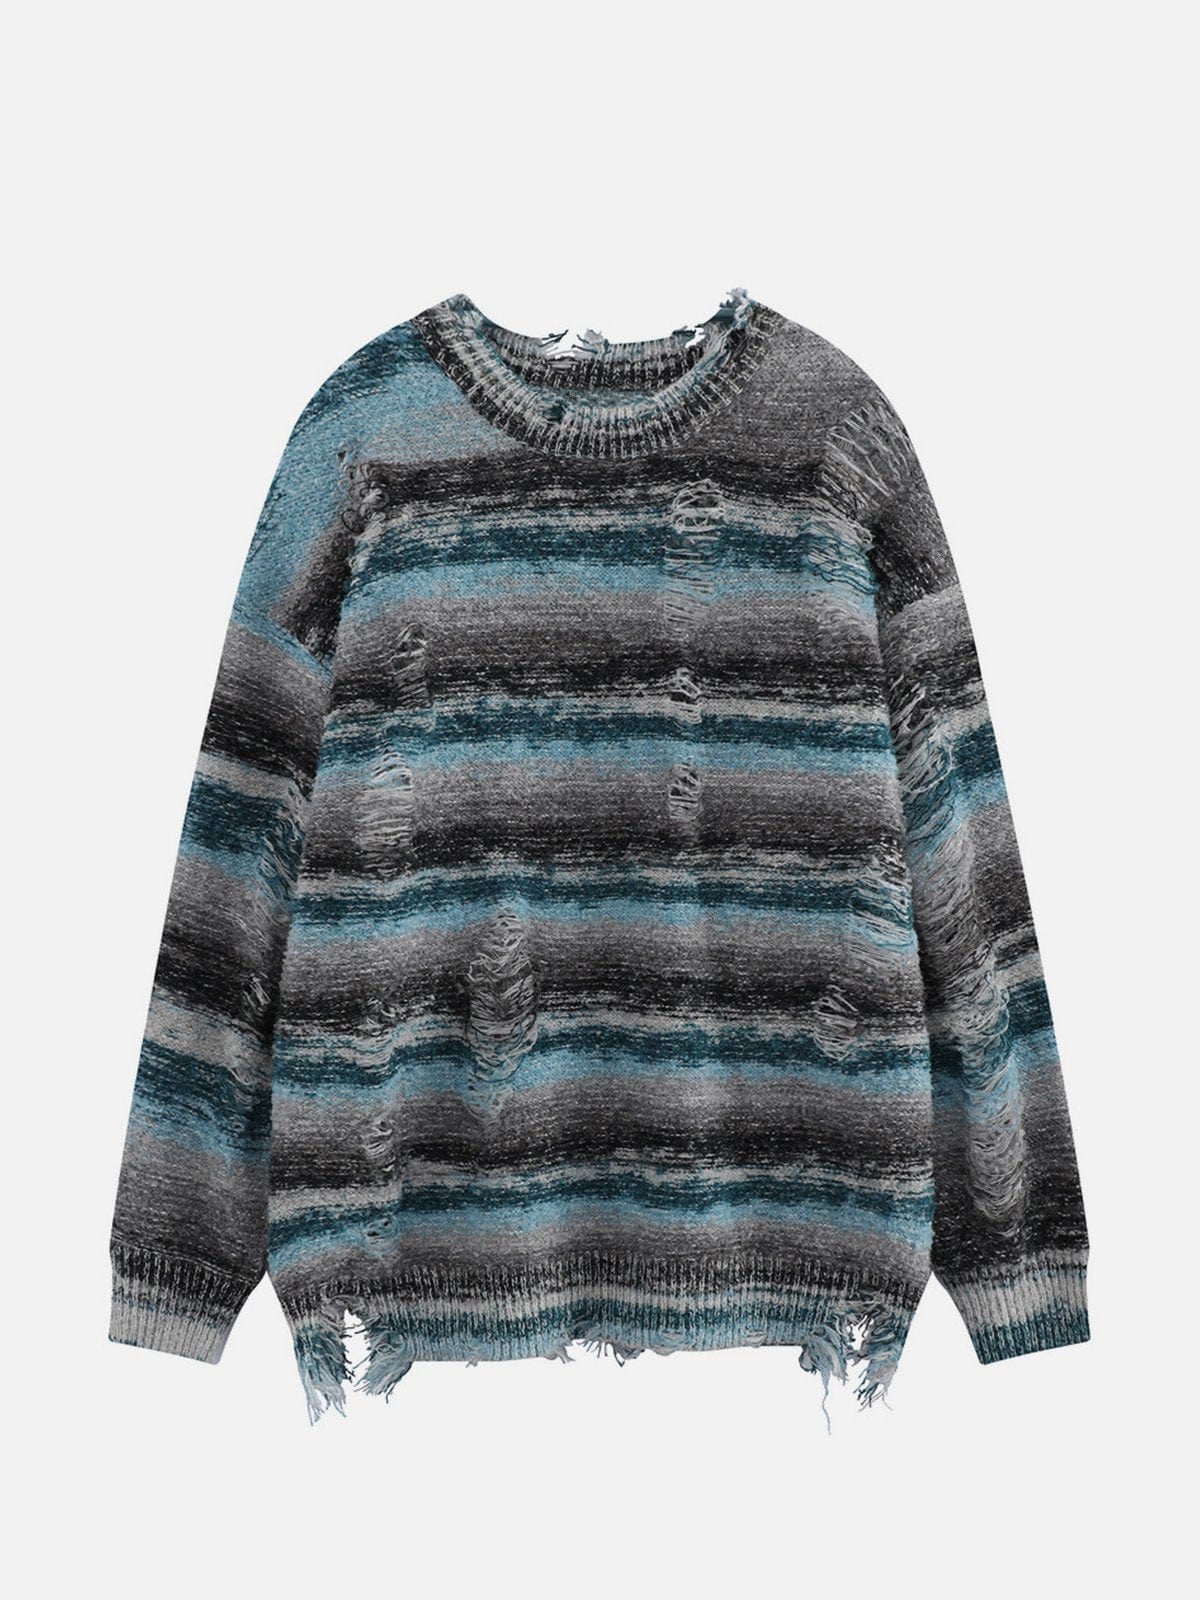 NEV Color Blocking Fringe Sweater